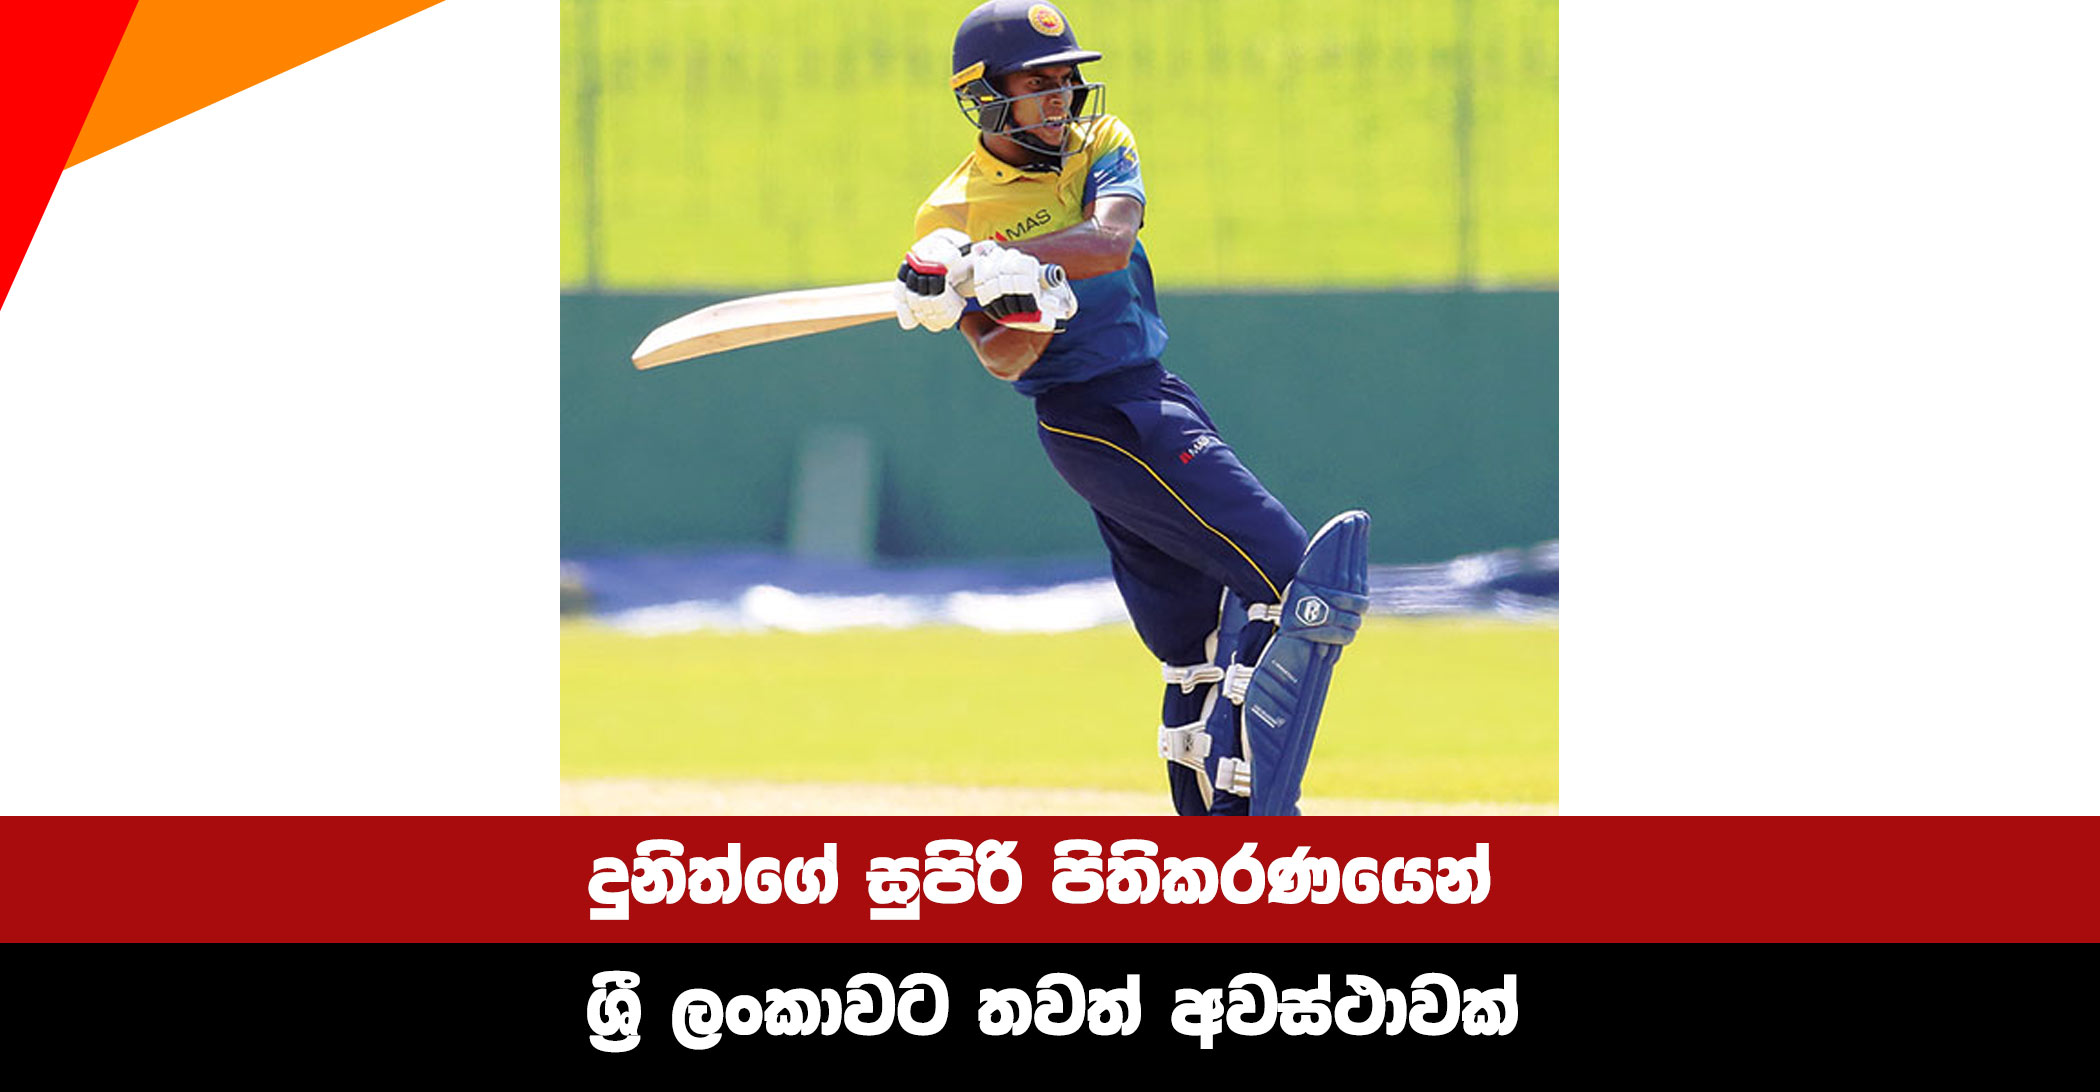 Dunith's superb batting gives Sri Lanka another chance